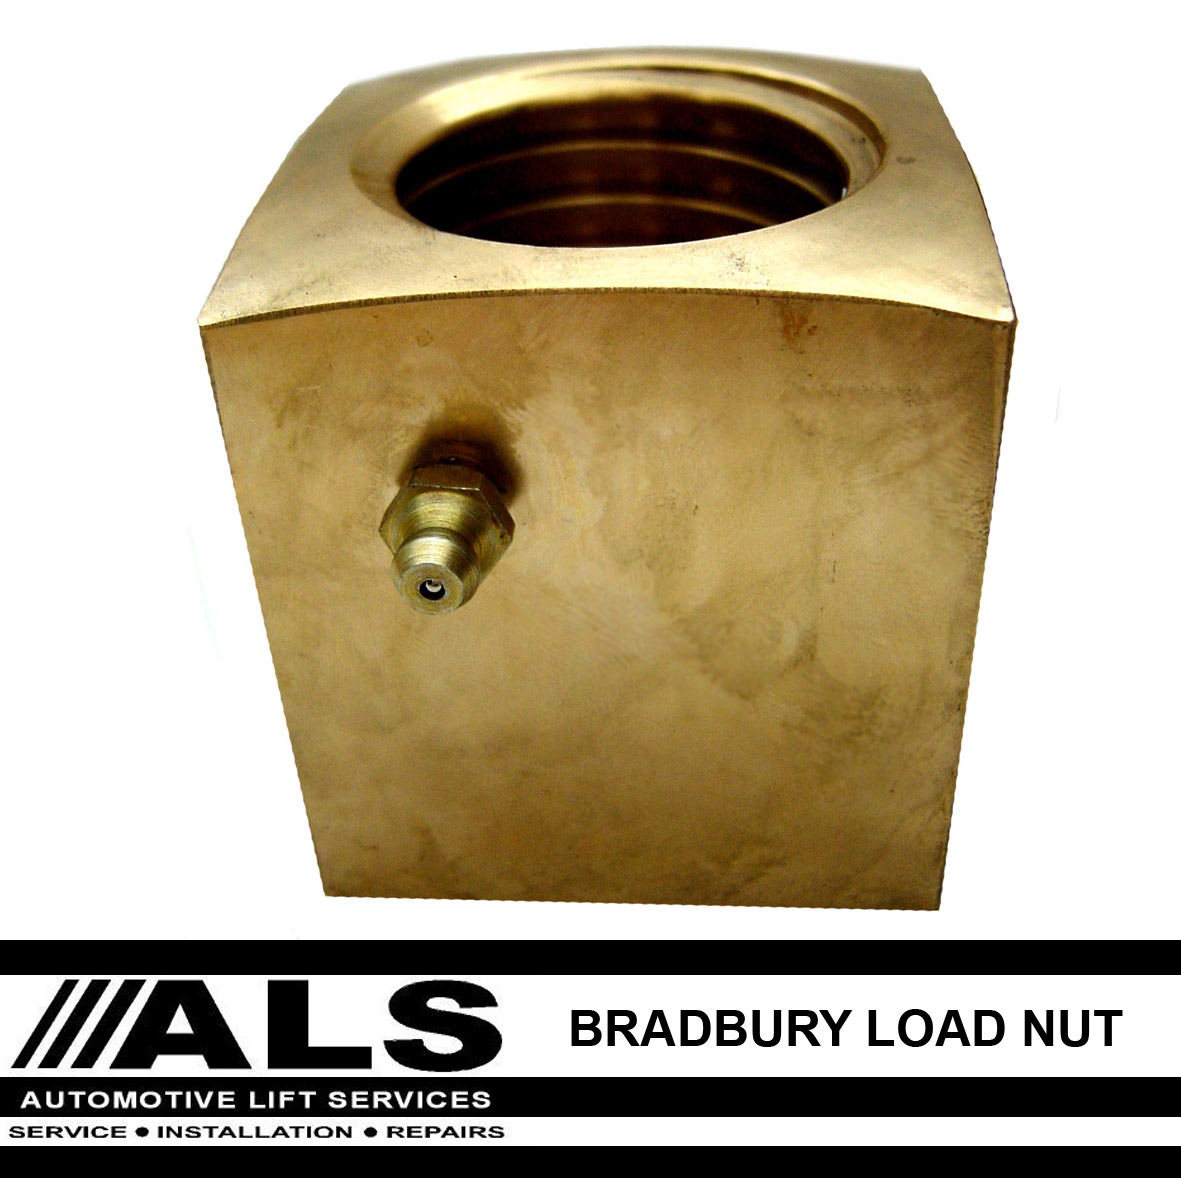 Bradbury 2103  2off  main load nut 2 post lift ramp direct  UK MANUFACTURER qty2 